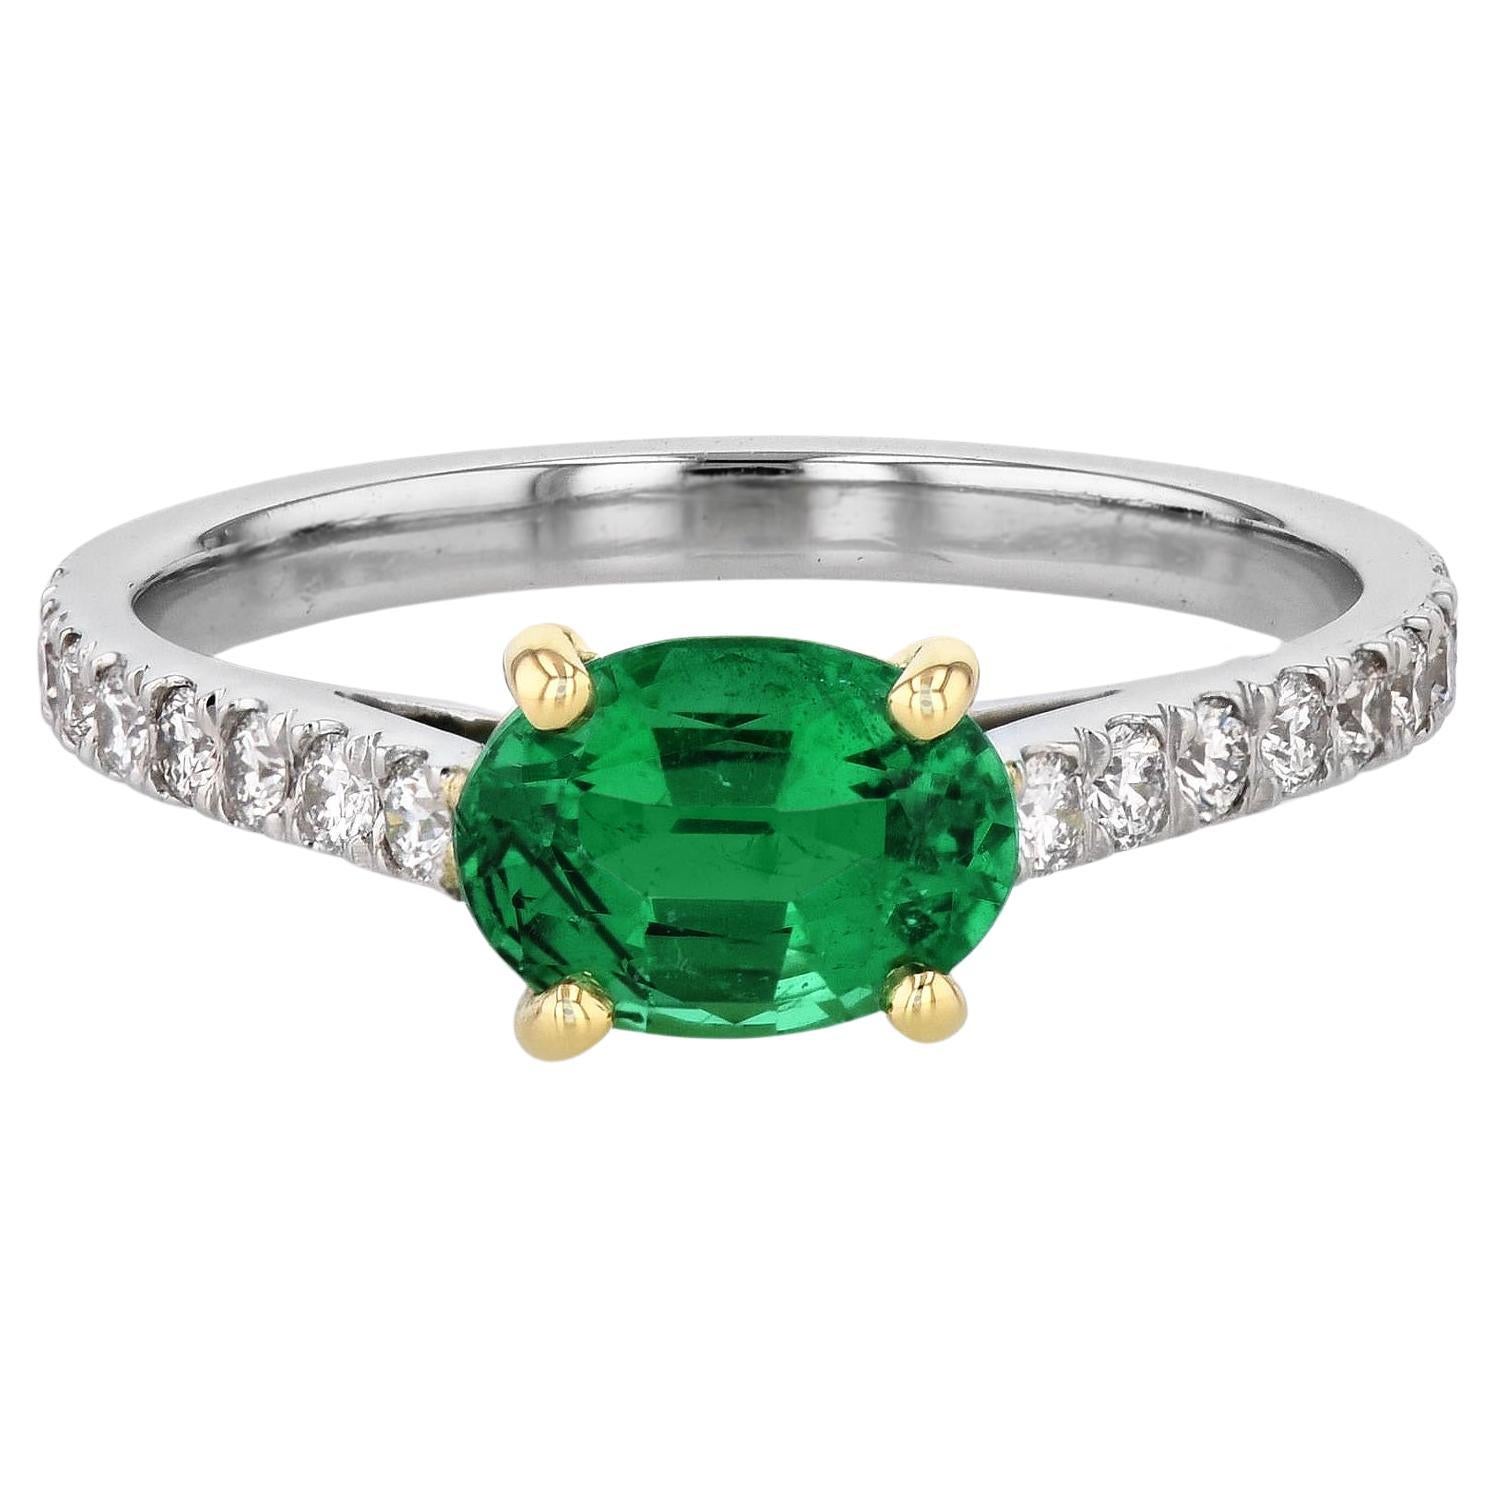 Are Zambian emeralds good quality?